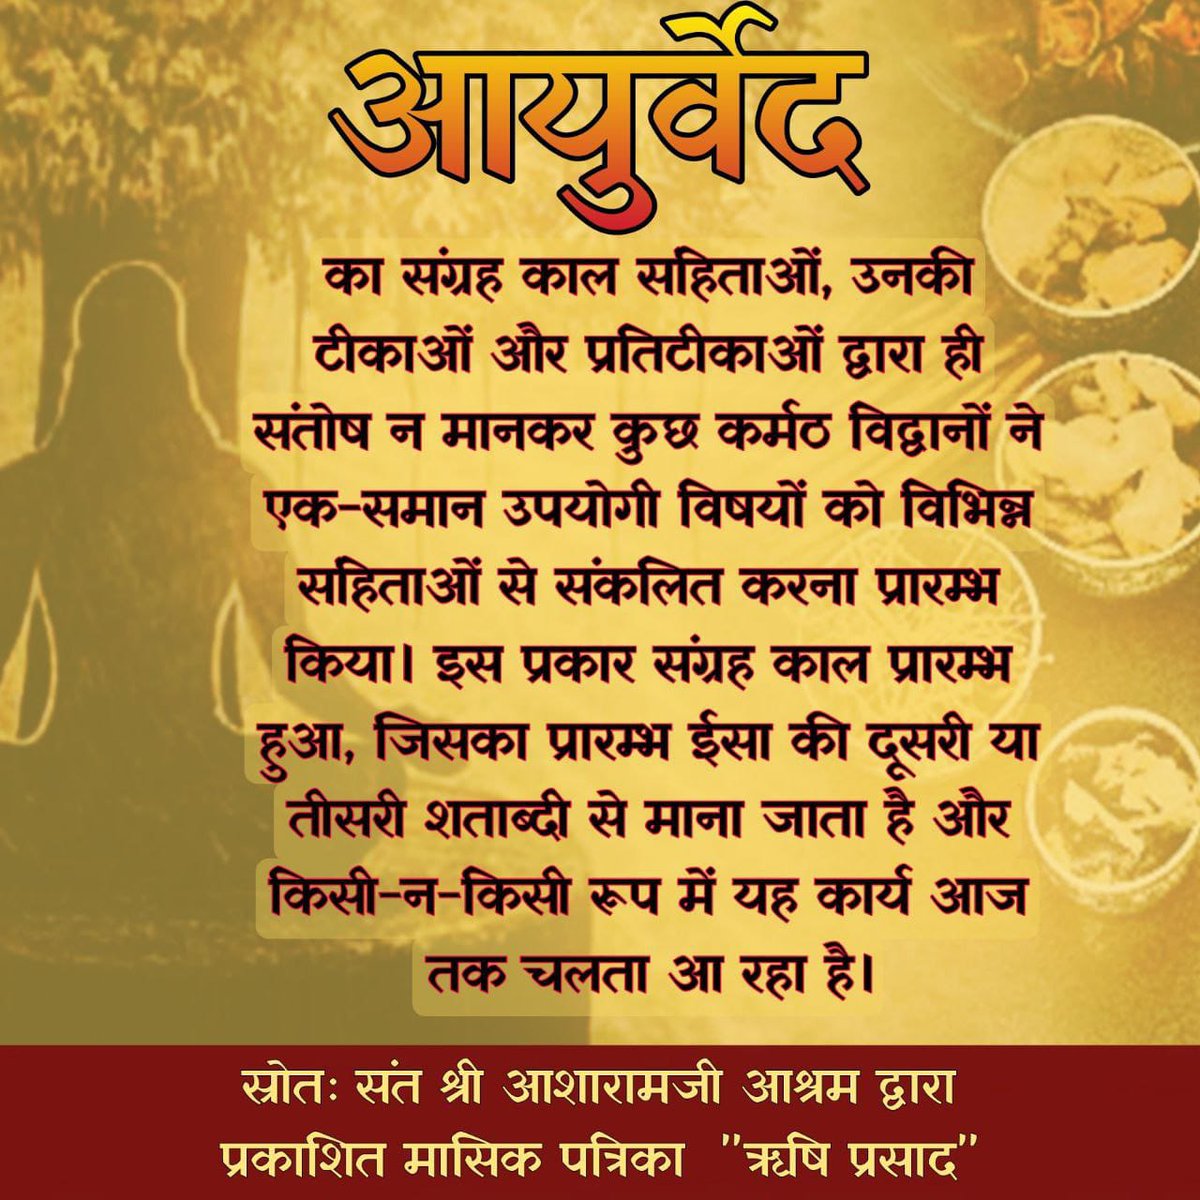 #AncientSecretsOfAyurveda
Gift of nature 
Sant shri asharamji bapu 
Discover of health